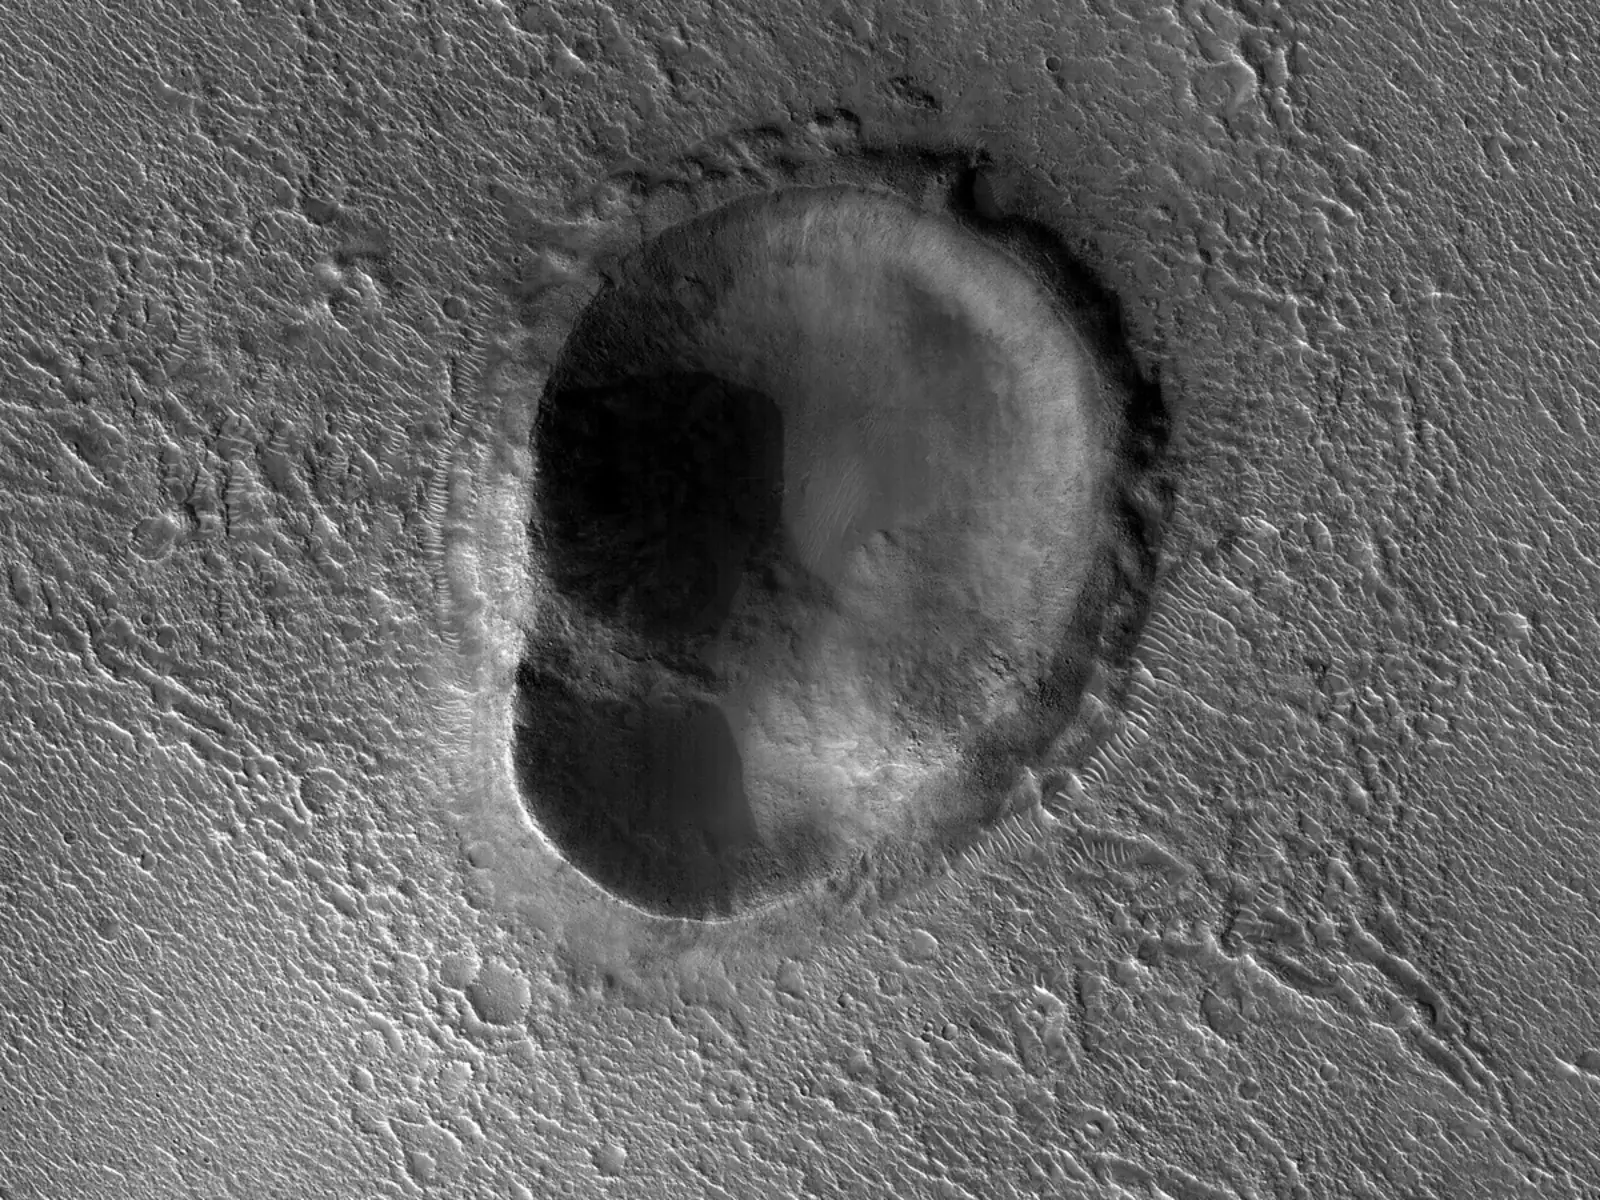 Кратер на Марсе, напоминающий человеческое ухо.